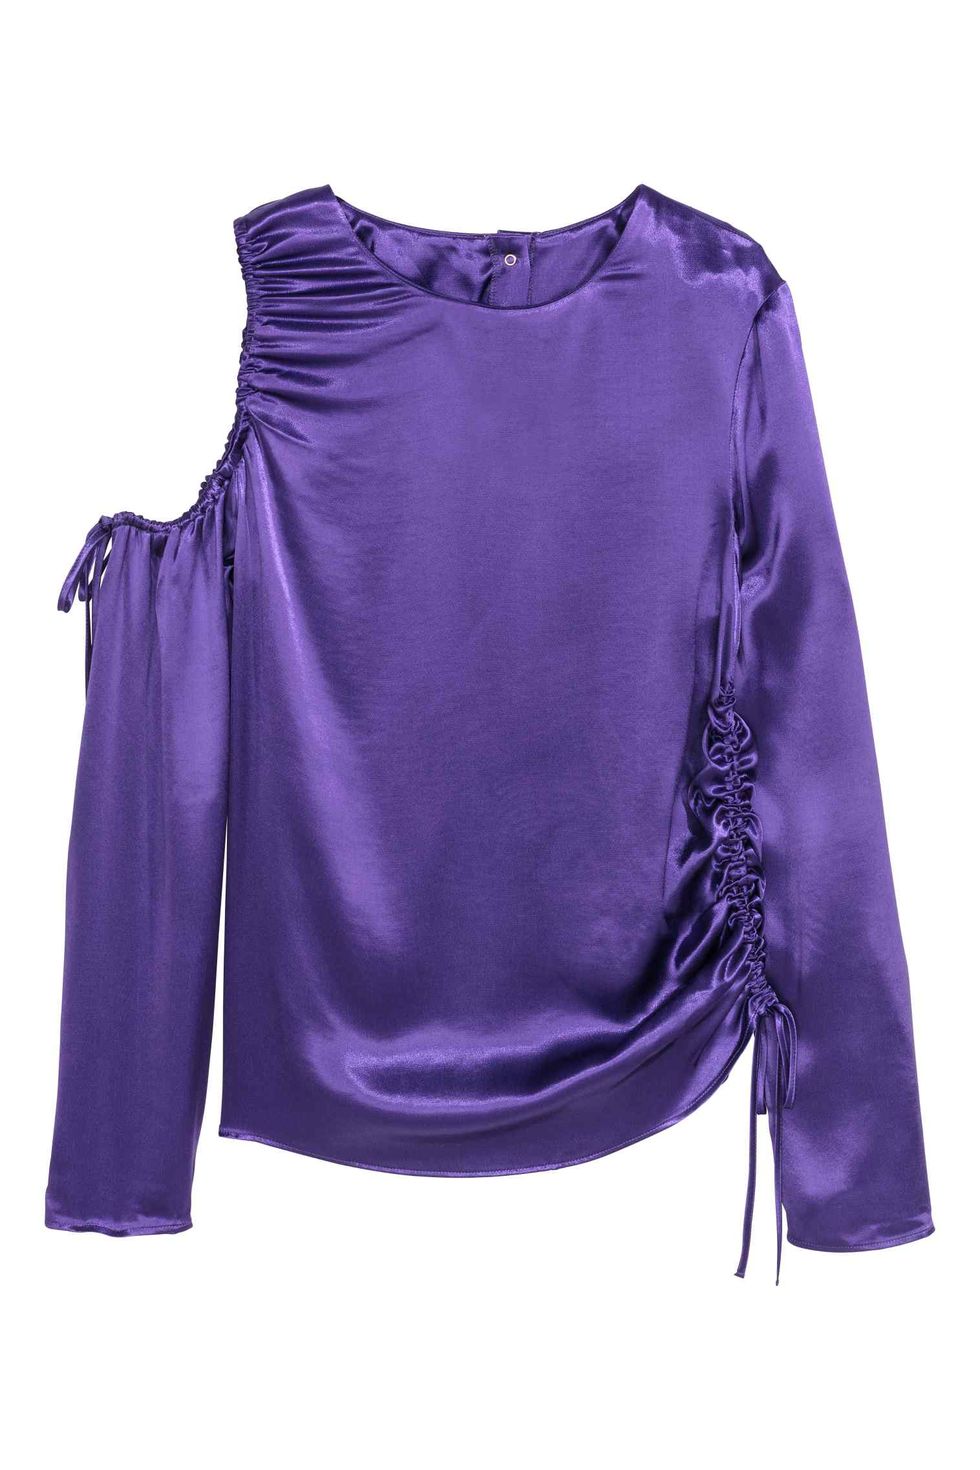 Clothing, Violet, Purple, Sleeve, Satin, Shoulder, Blouse, Magenta, Outerwear, Neck, 